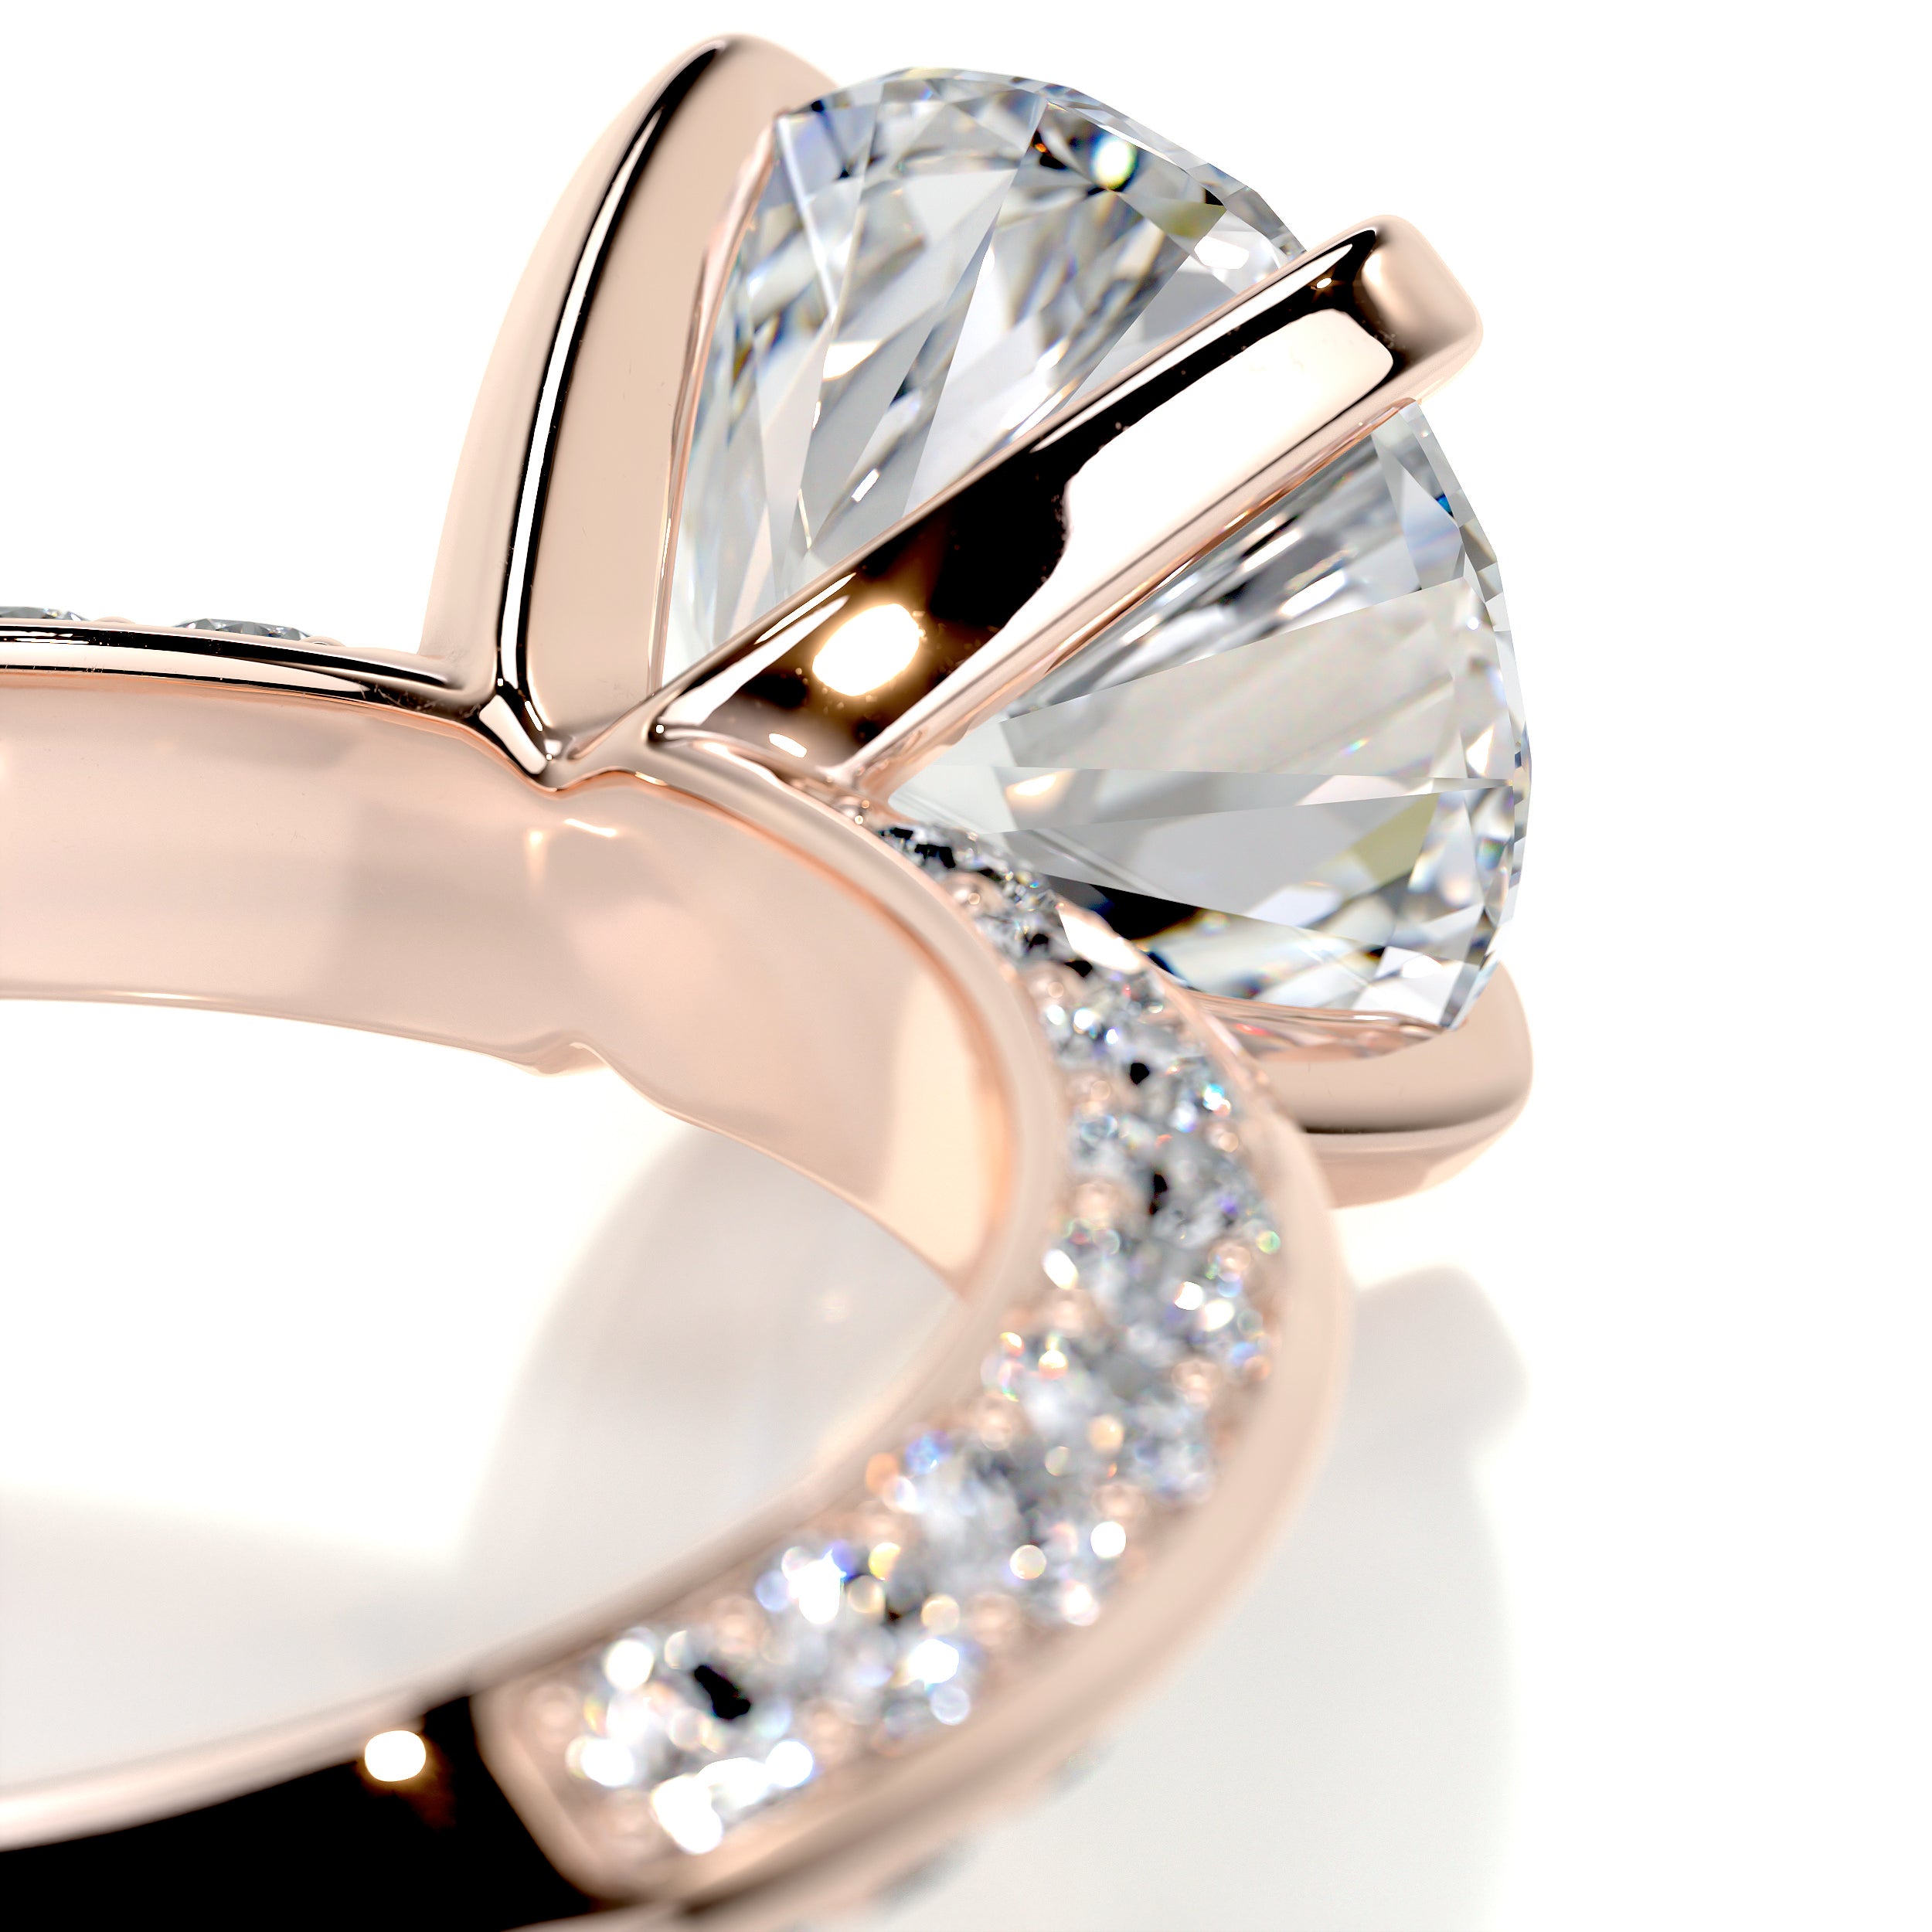 Ariana Diamond Engagement Ring -14K Rose Gold